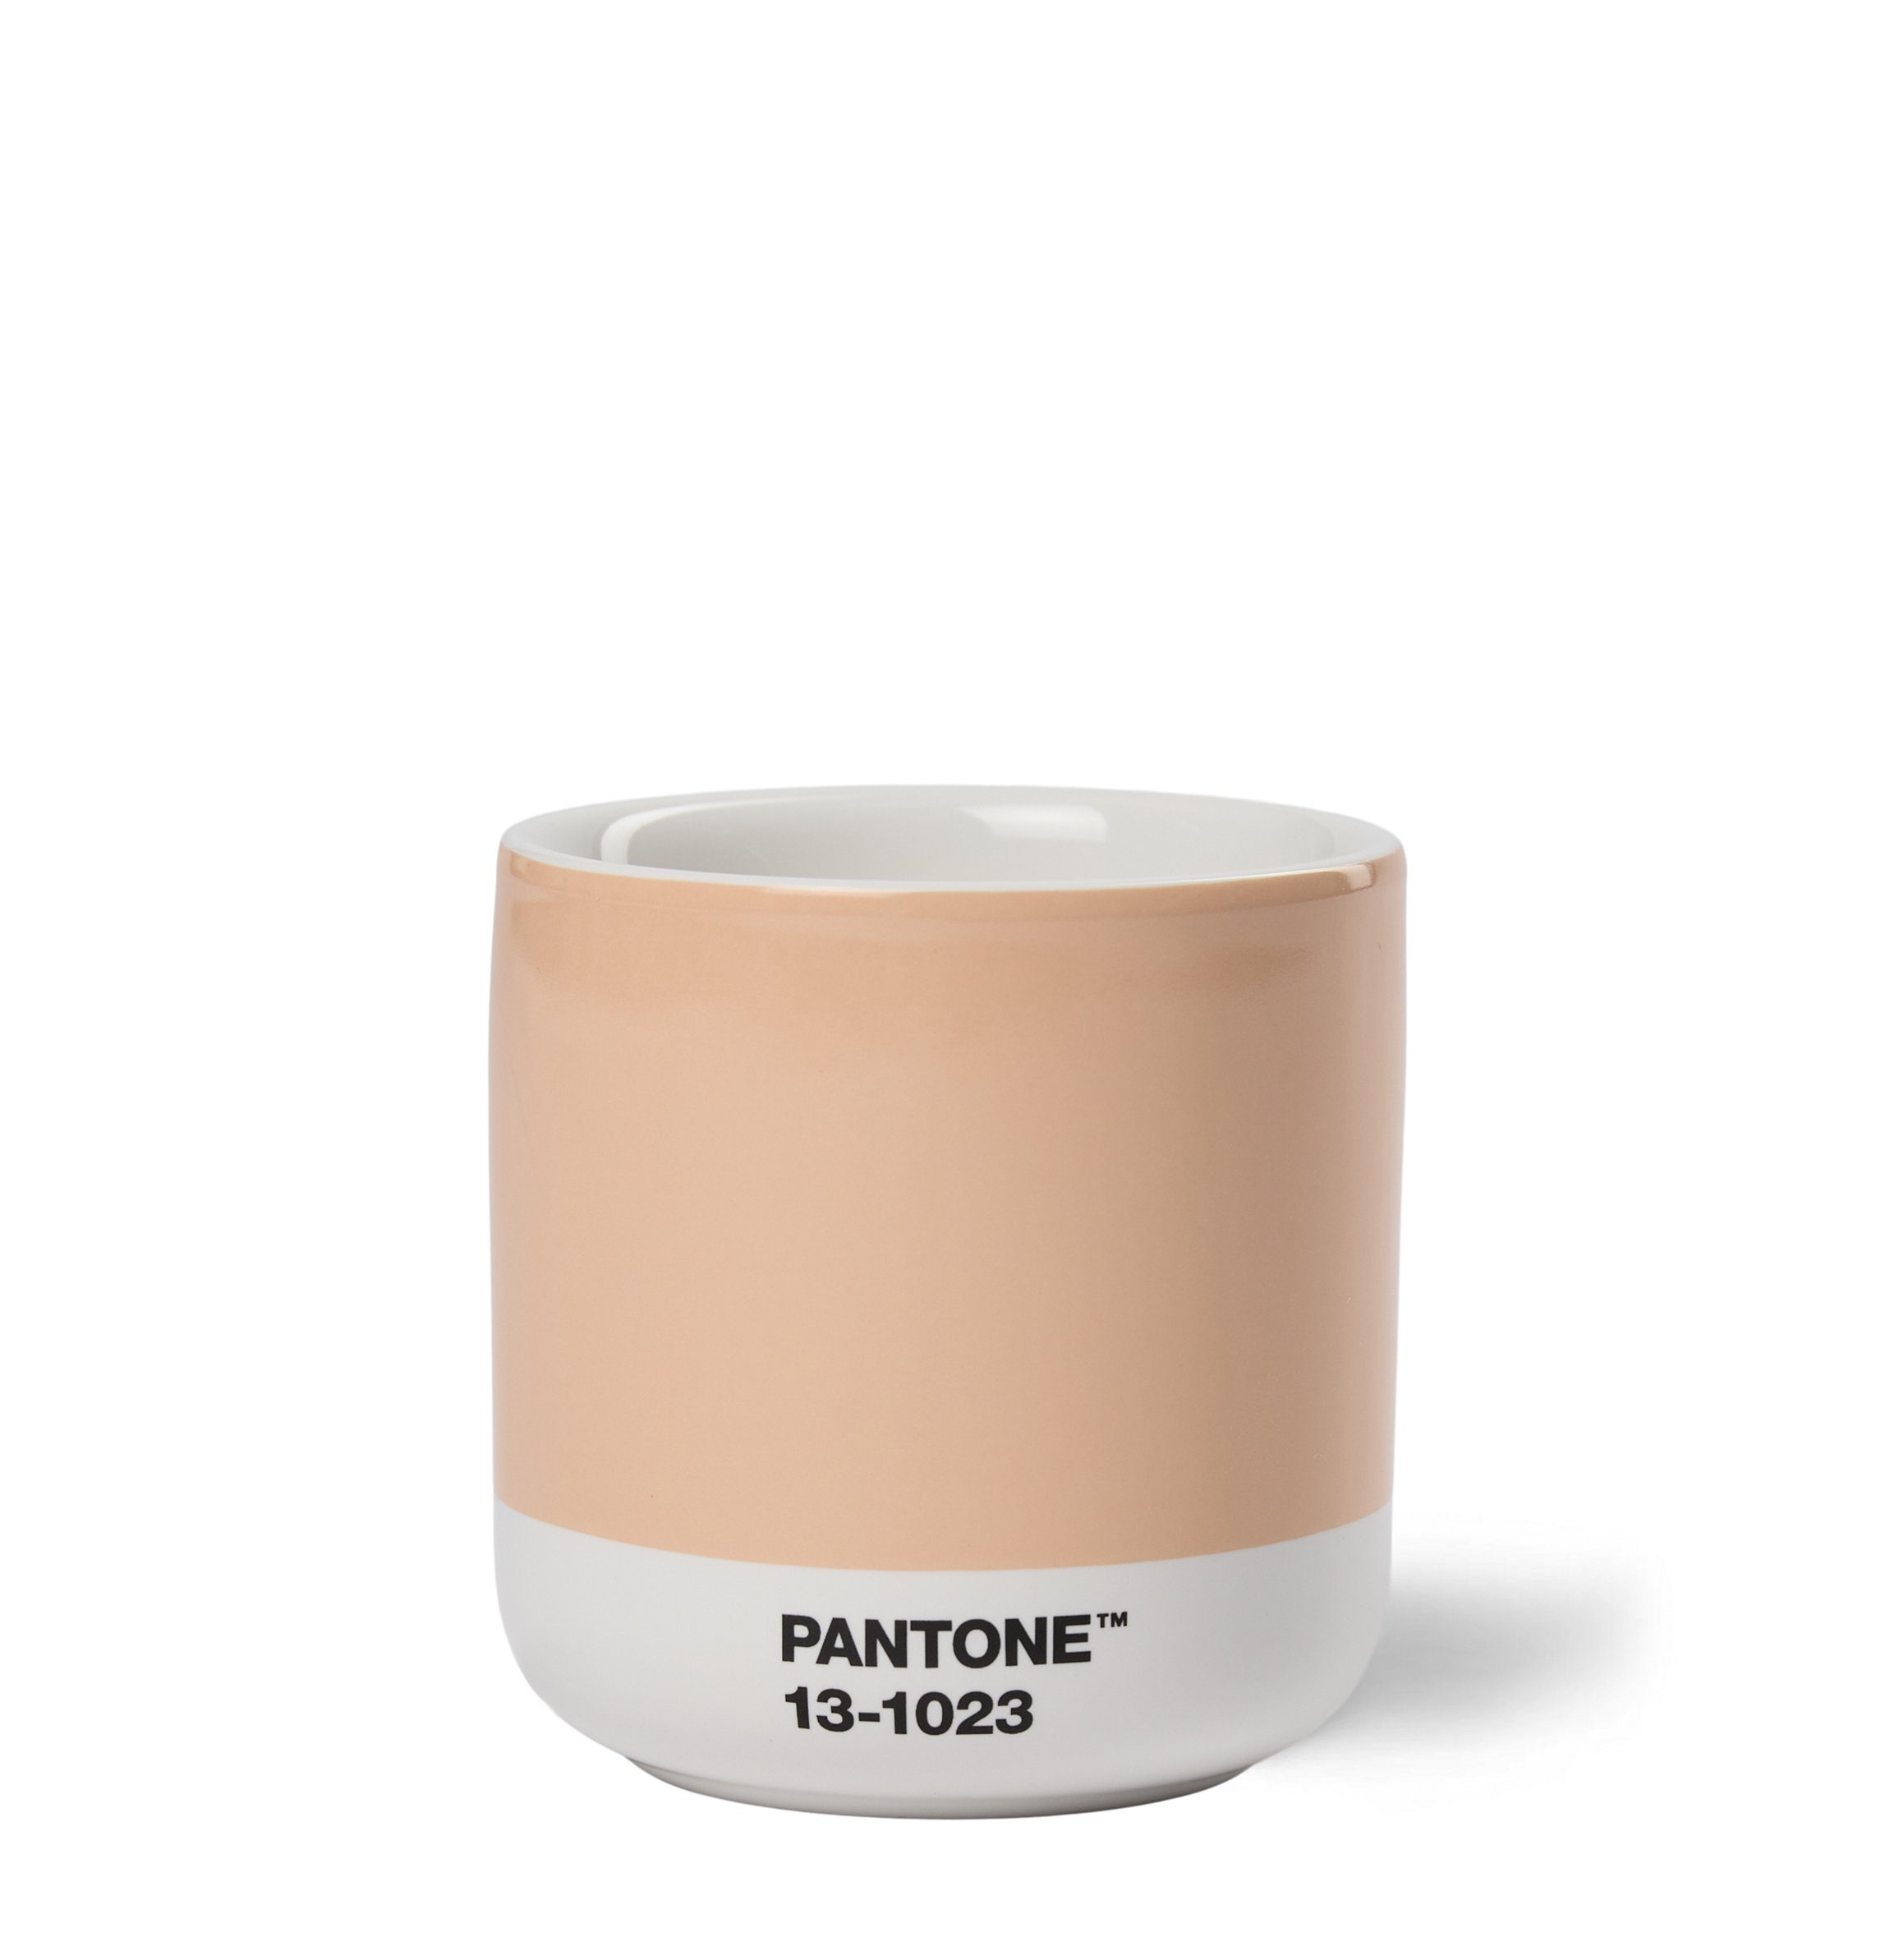 PANTONE Kaffeeservice Thermobecher Cortado, doppelwandig,190ml COY 2024 - Peach Fuzz 13-1023, Farbe des Jahres 2024 Pantone